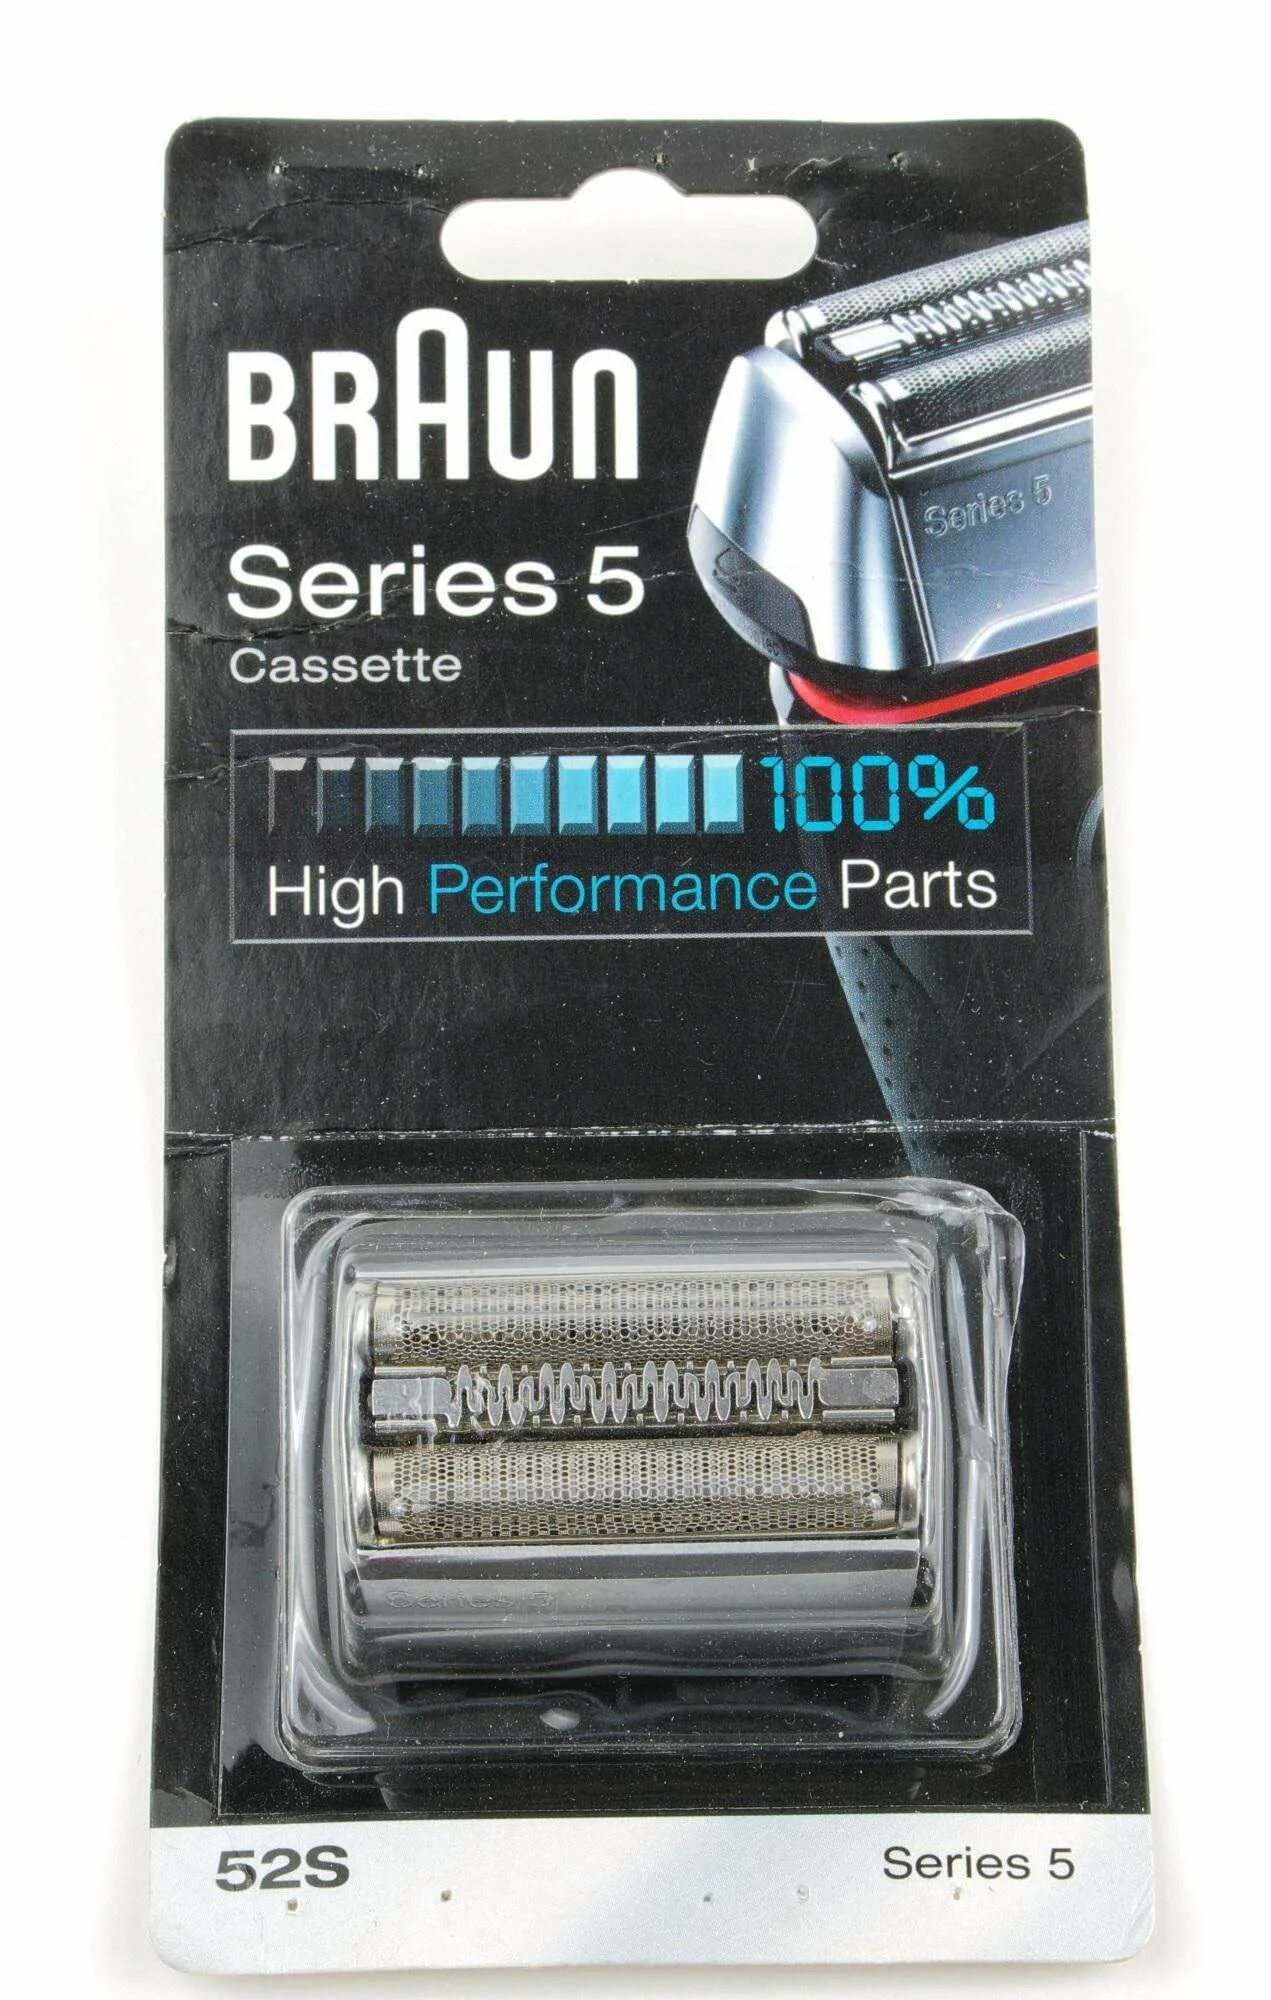 Сетка braun series 5. Сетка+режущий блок Braun 5 52s. Сетка и режущий блок для электробритвы Braun 52s. Braun 52s. Сетка и режущий блок Braun Combi 52s (Series 5), Braun 5.